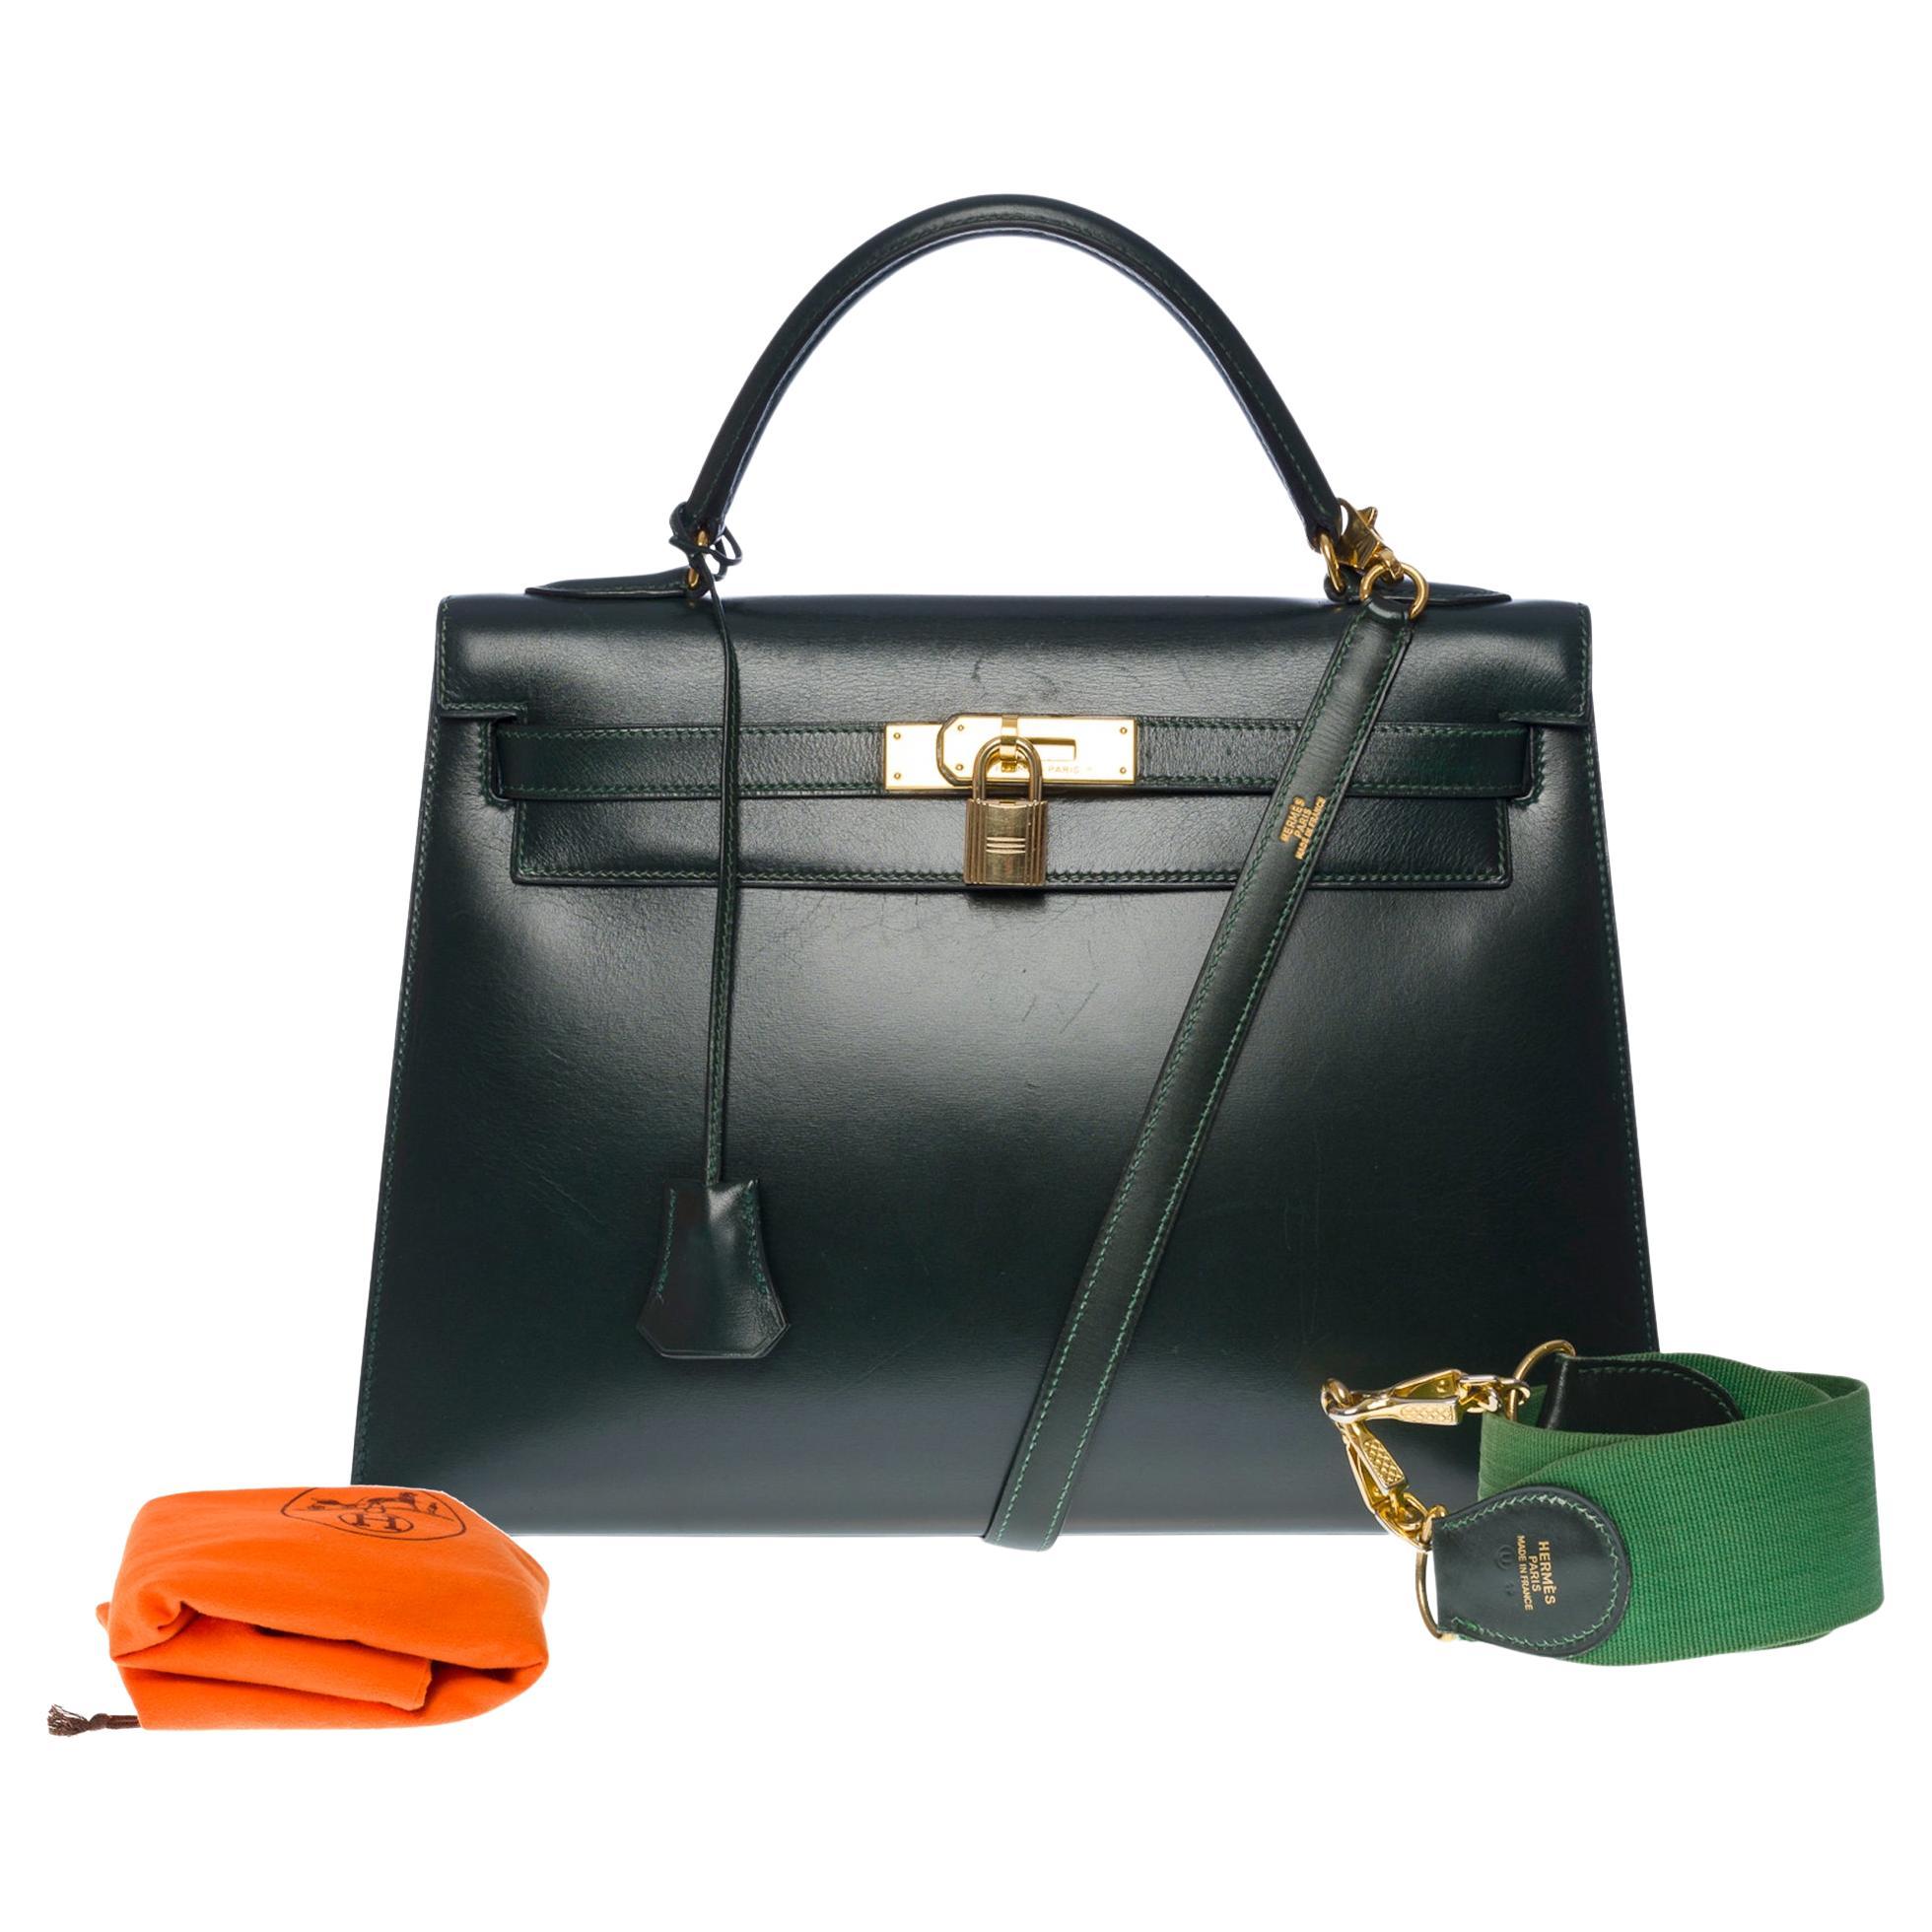 Rare Hermès Kelly 32 sellier handbag double straps in green box calf leather, GHW en vente